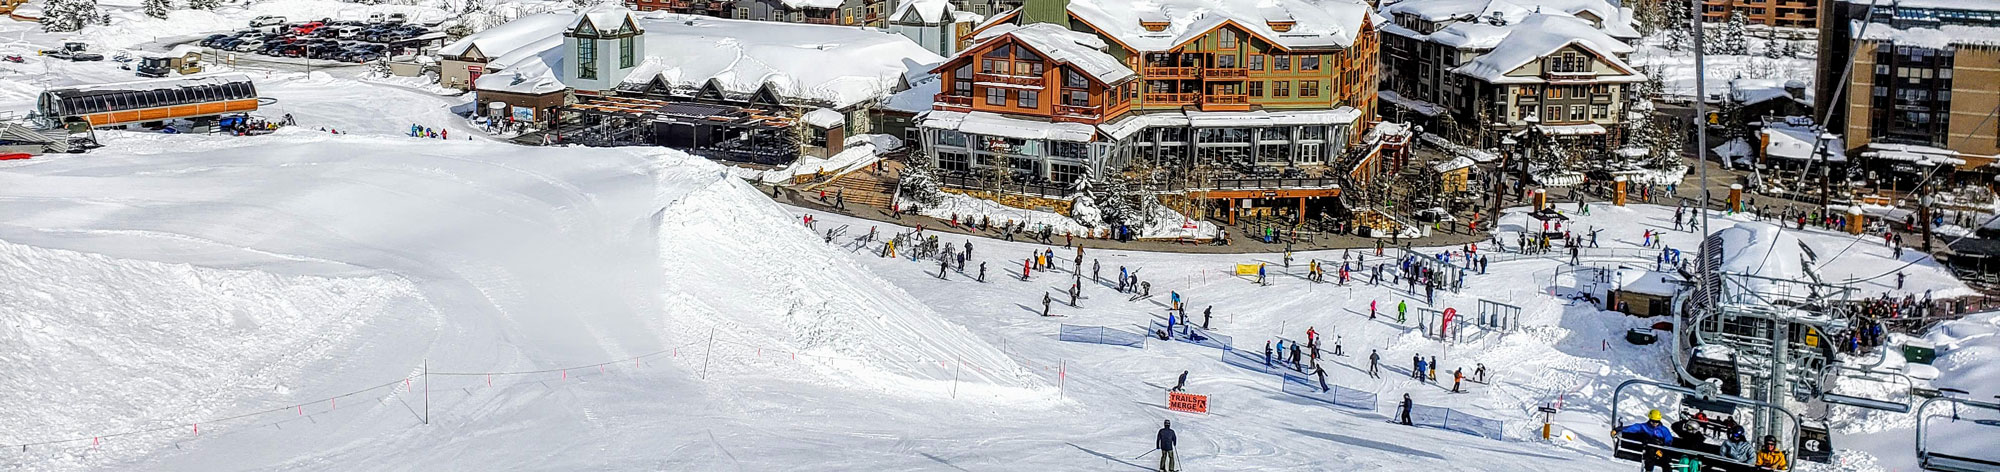 people skiing down the skiing platform and resorts along side the skiing platform